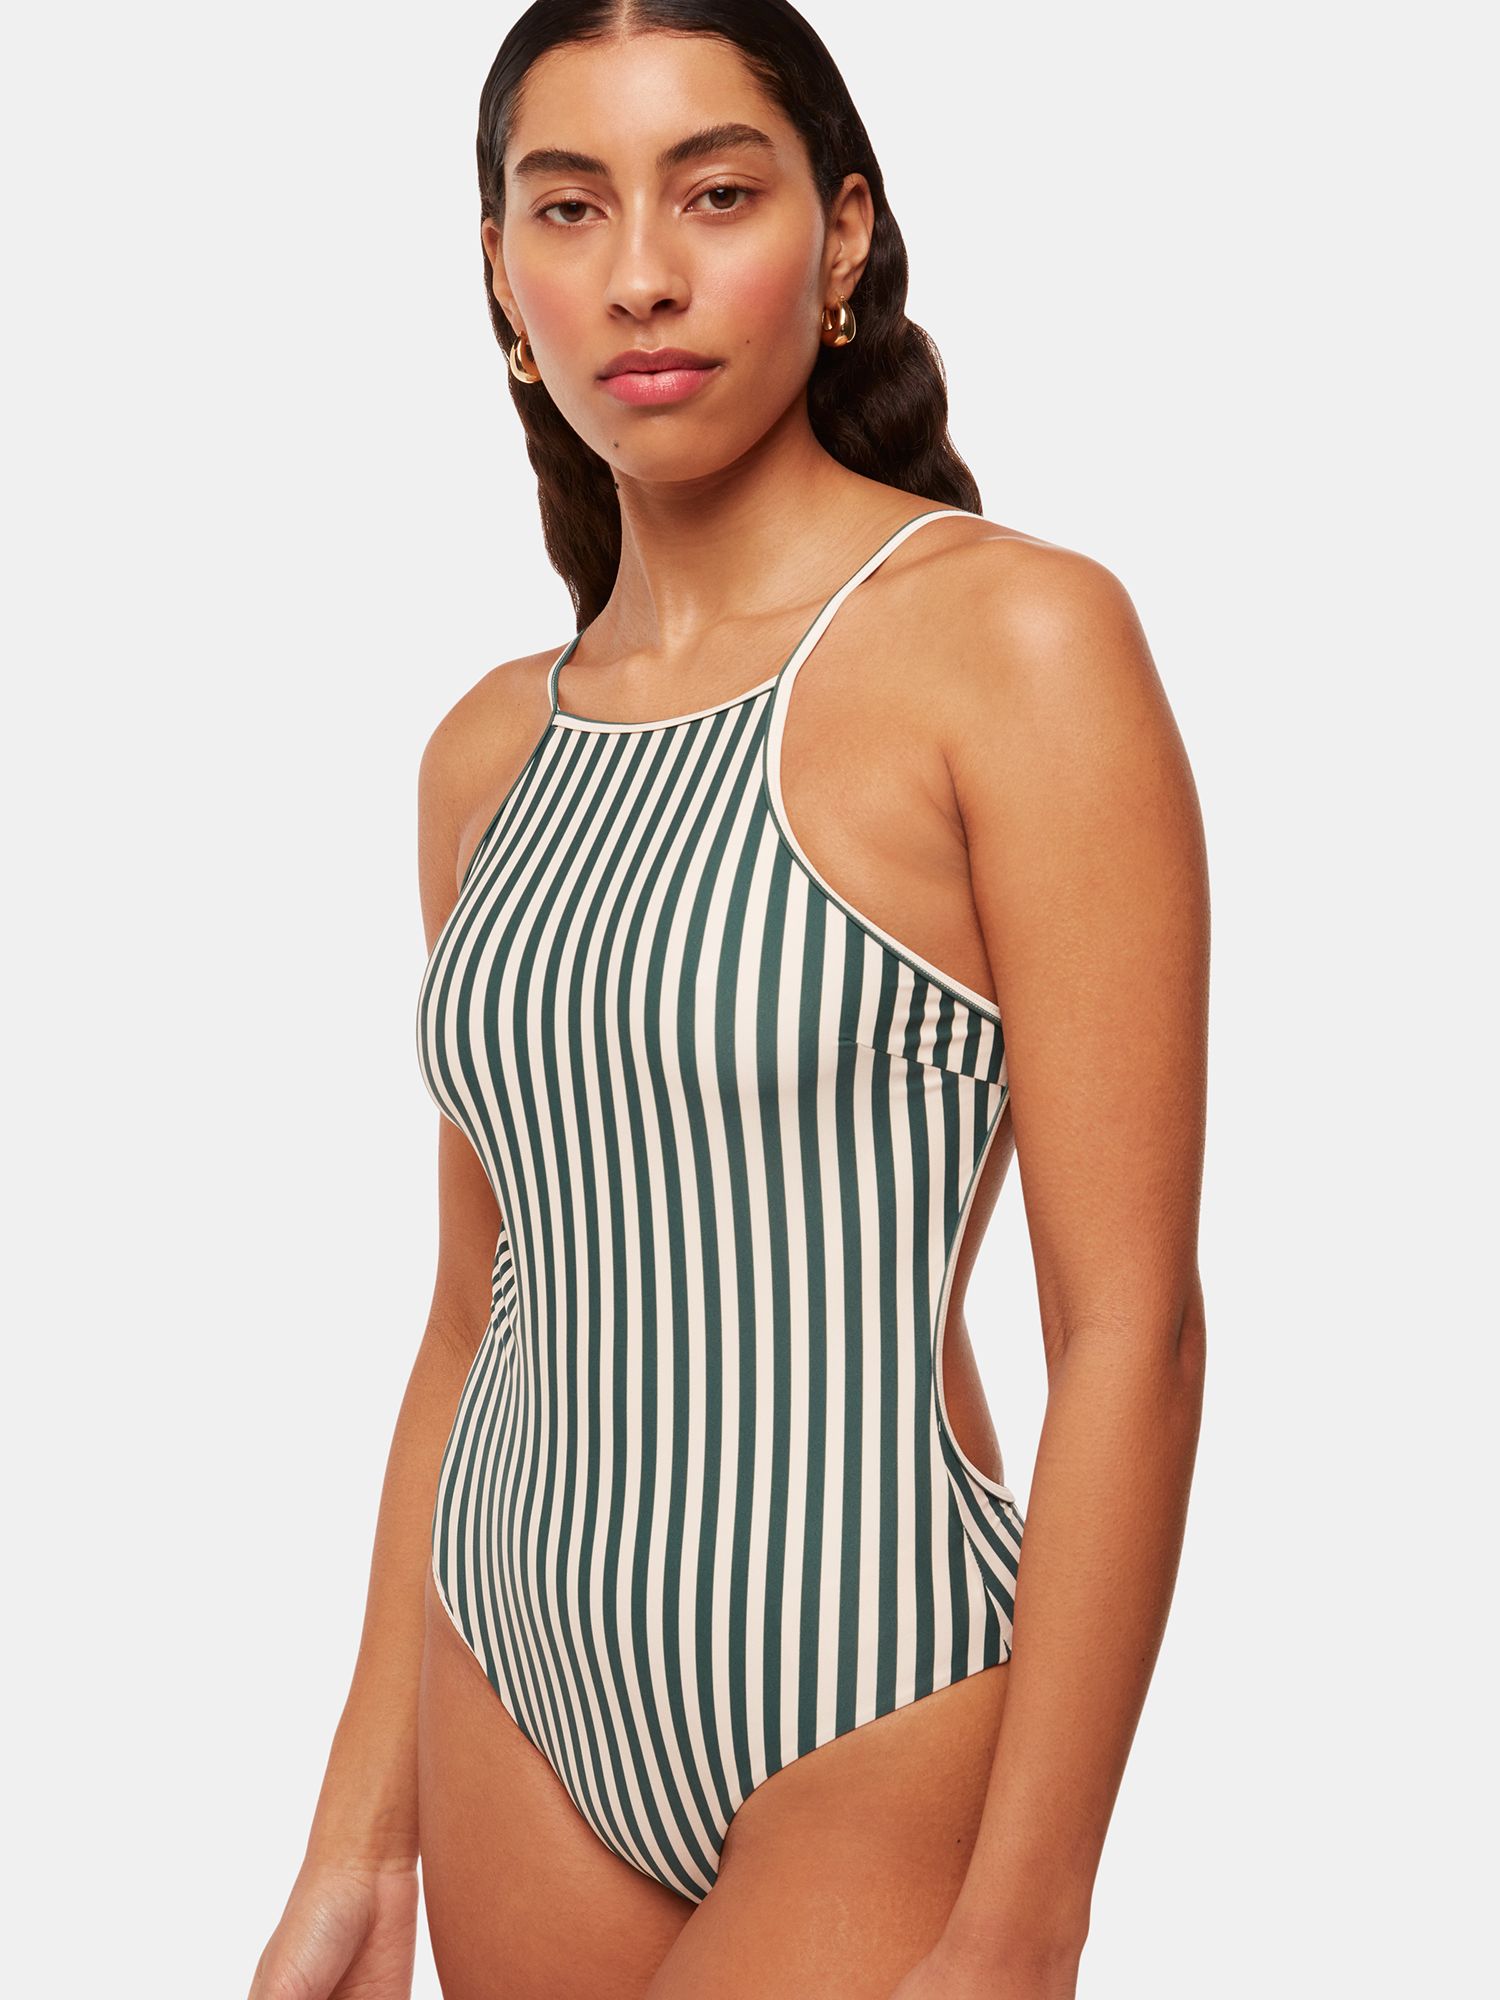 Whistles Striped Open Back Swimsuit, Green/White, 6